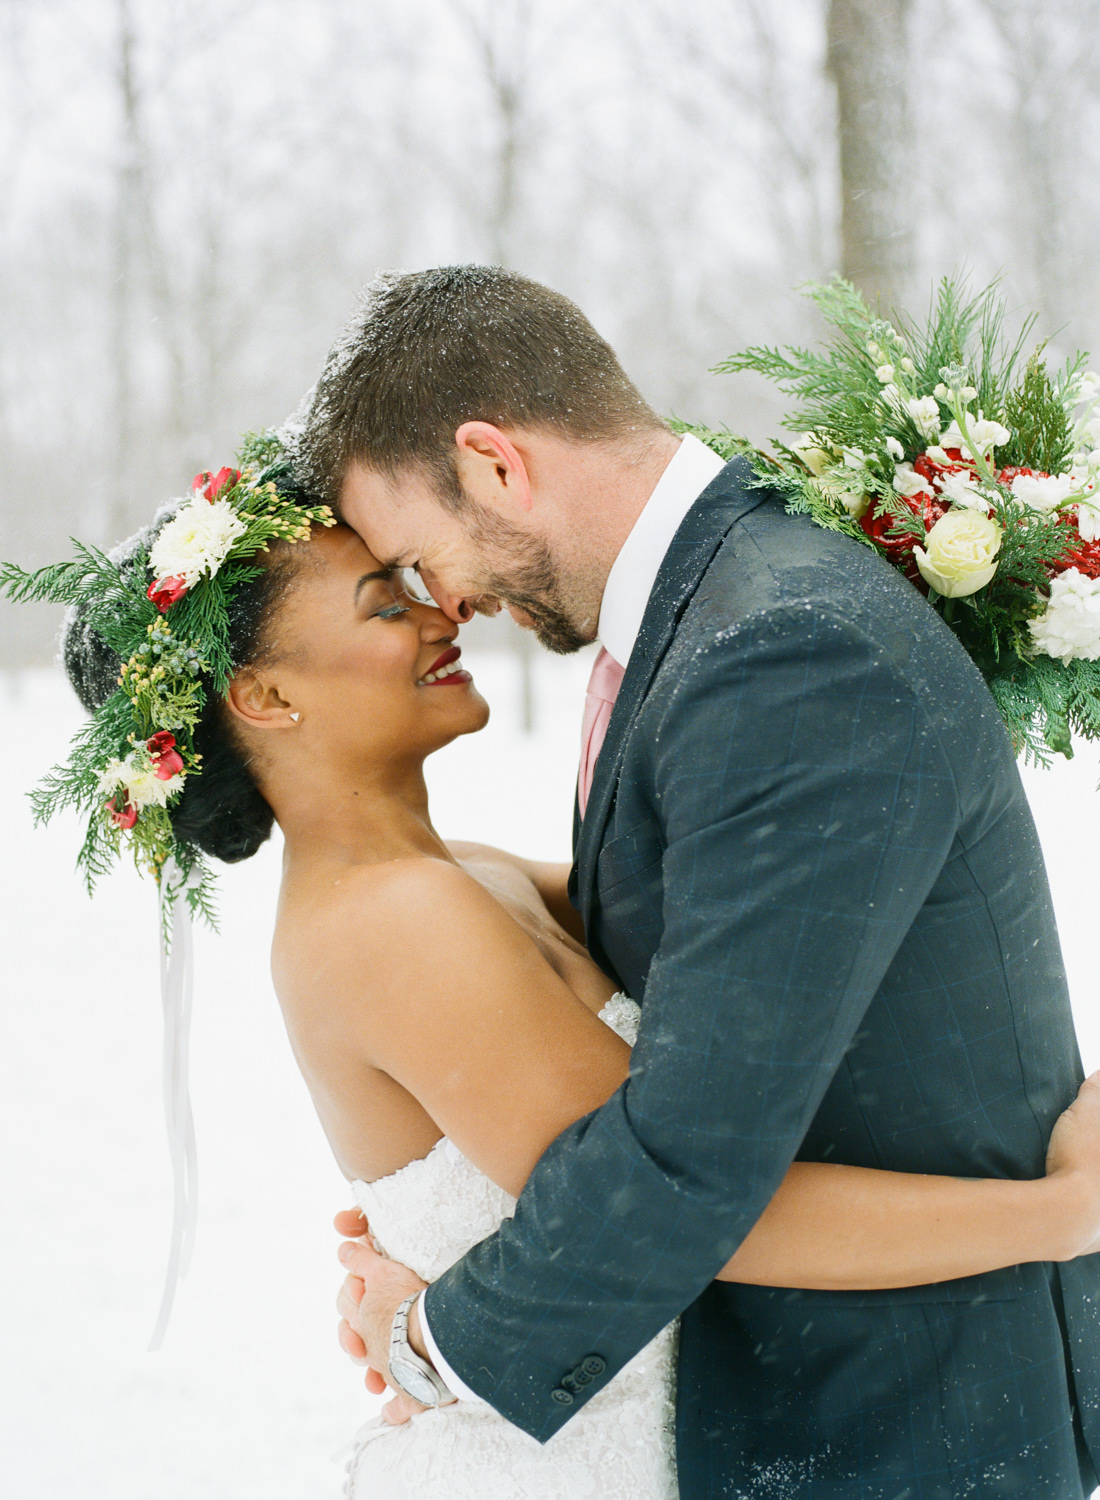 Winter wedding bride and groom in snow; St. Louis fine art film wedding photographer Erica Robnett Photography